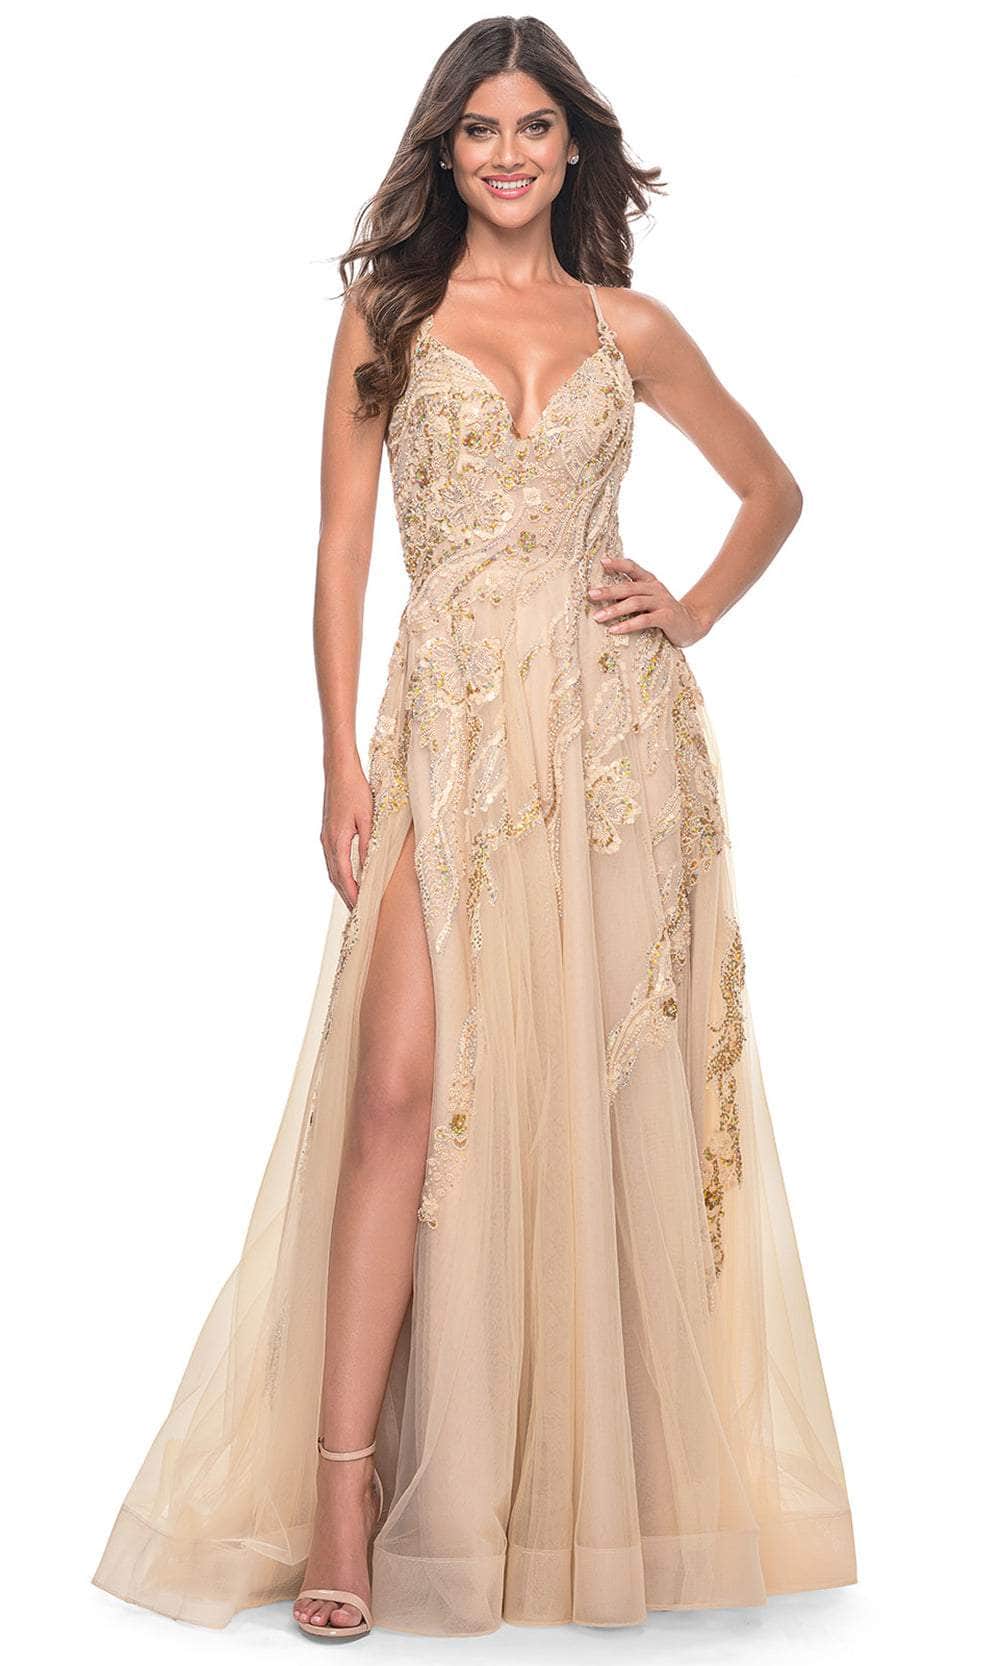 La Femme 32032 - Sequin Beaded Prom Dress
